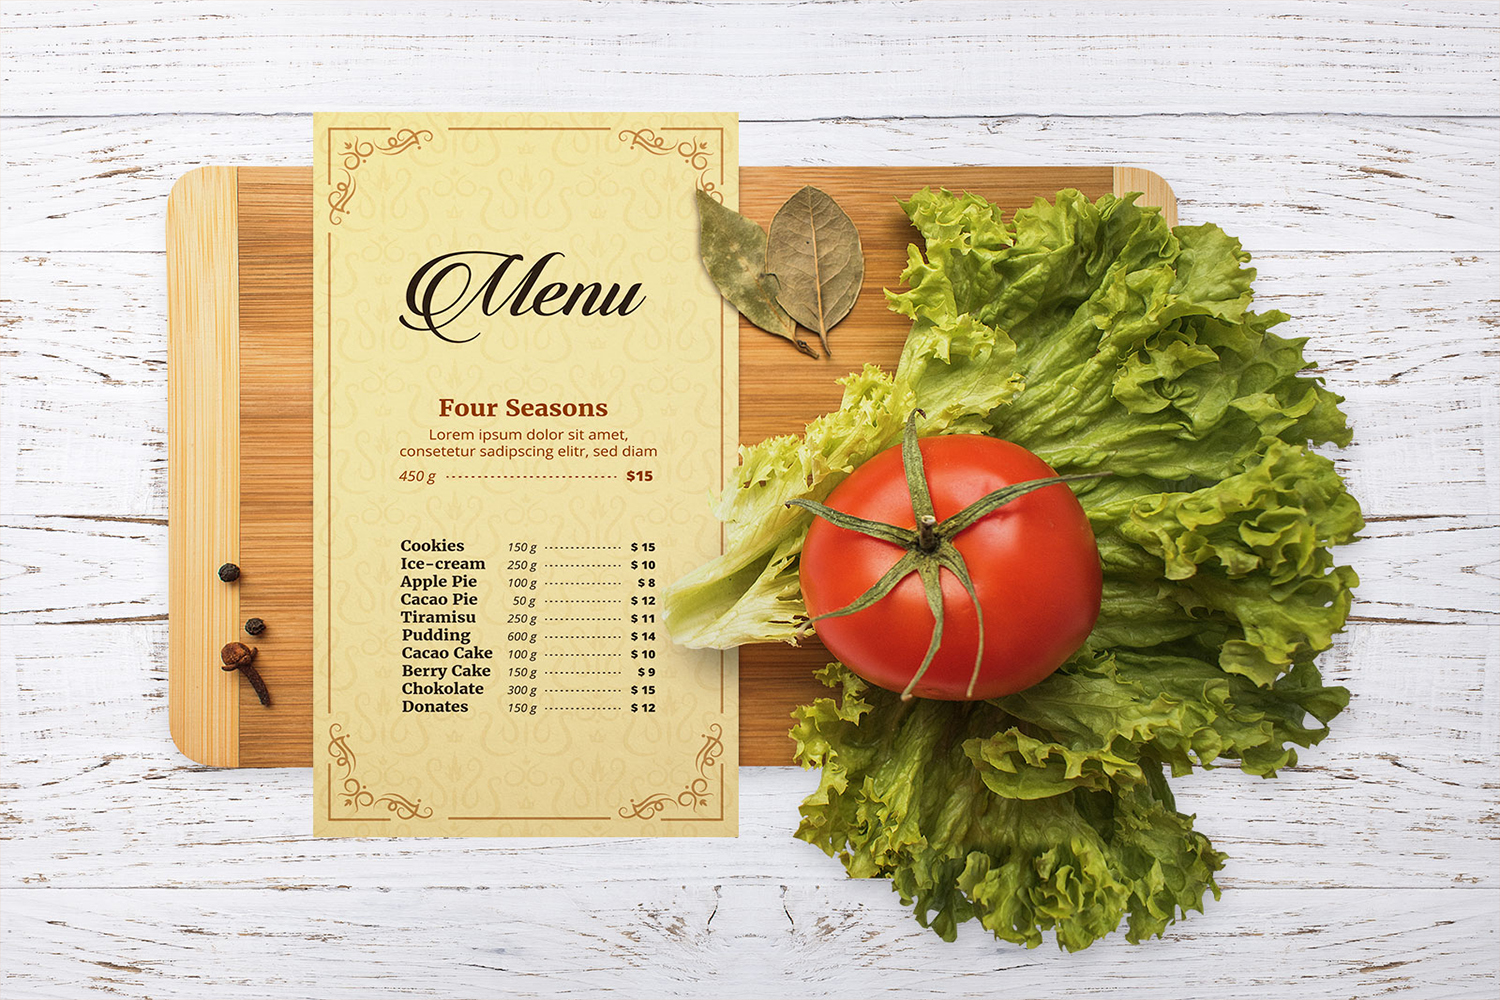 Restaurant Menu Mockup PSD With Vegetables Free Download